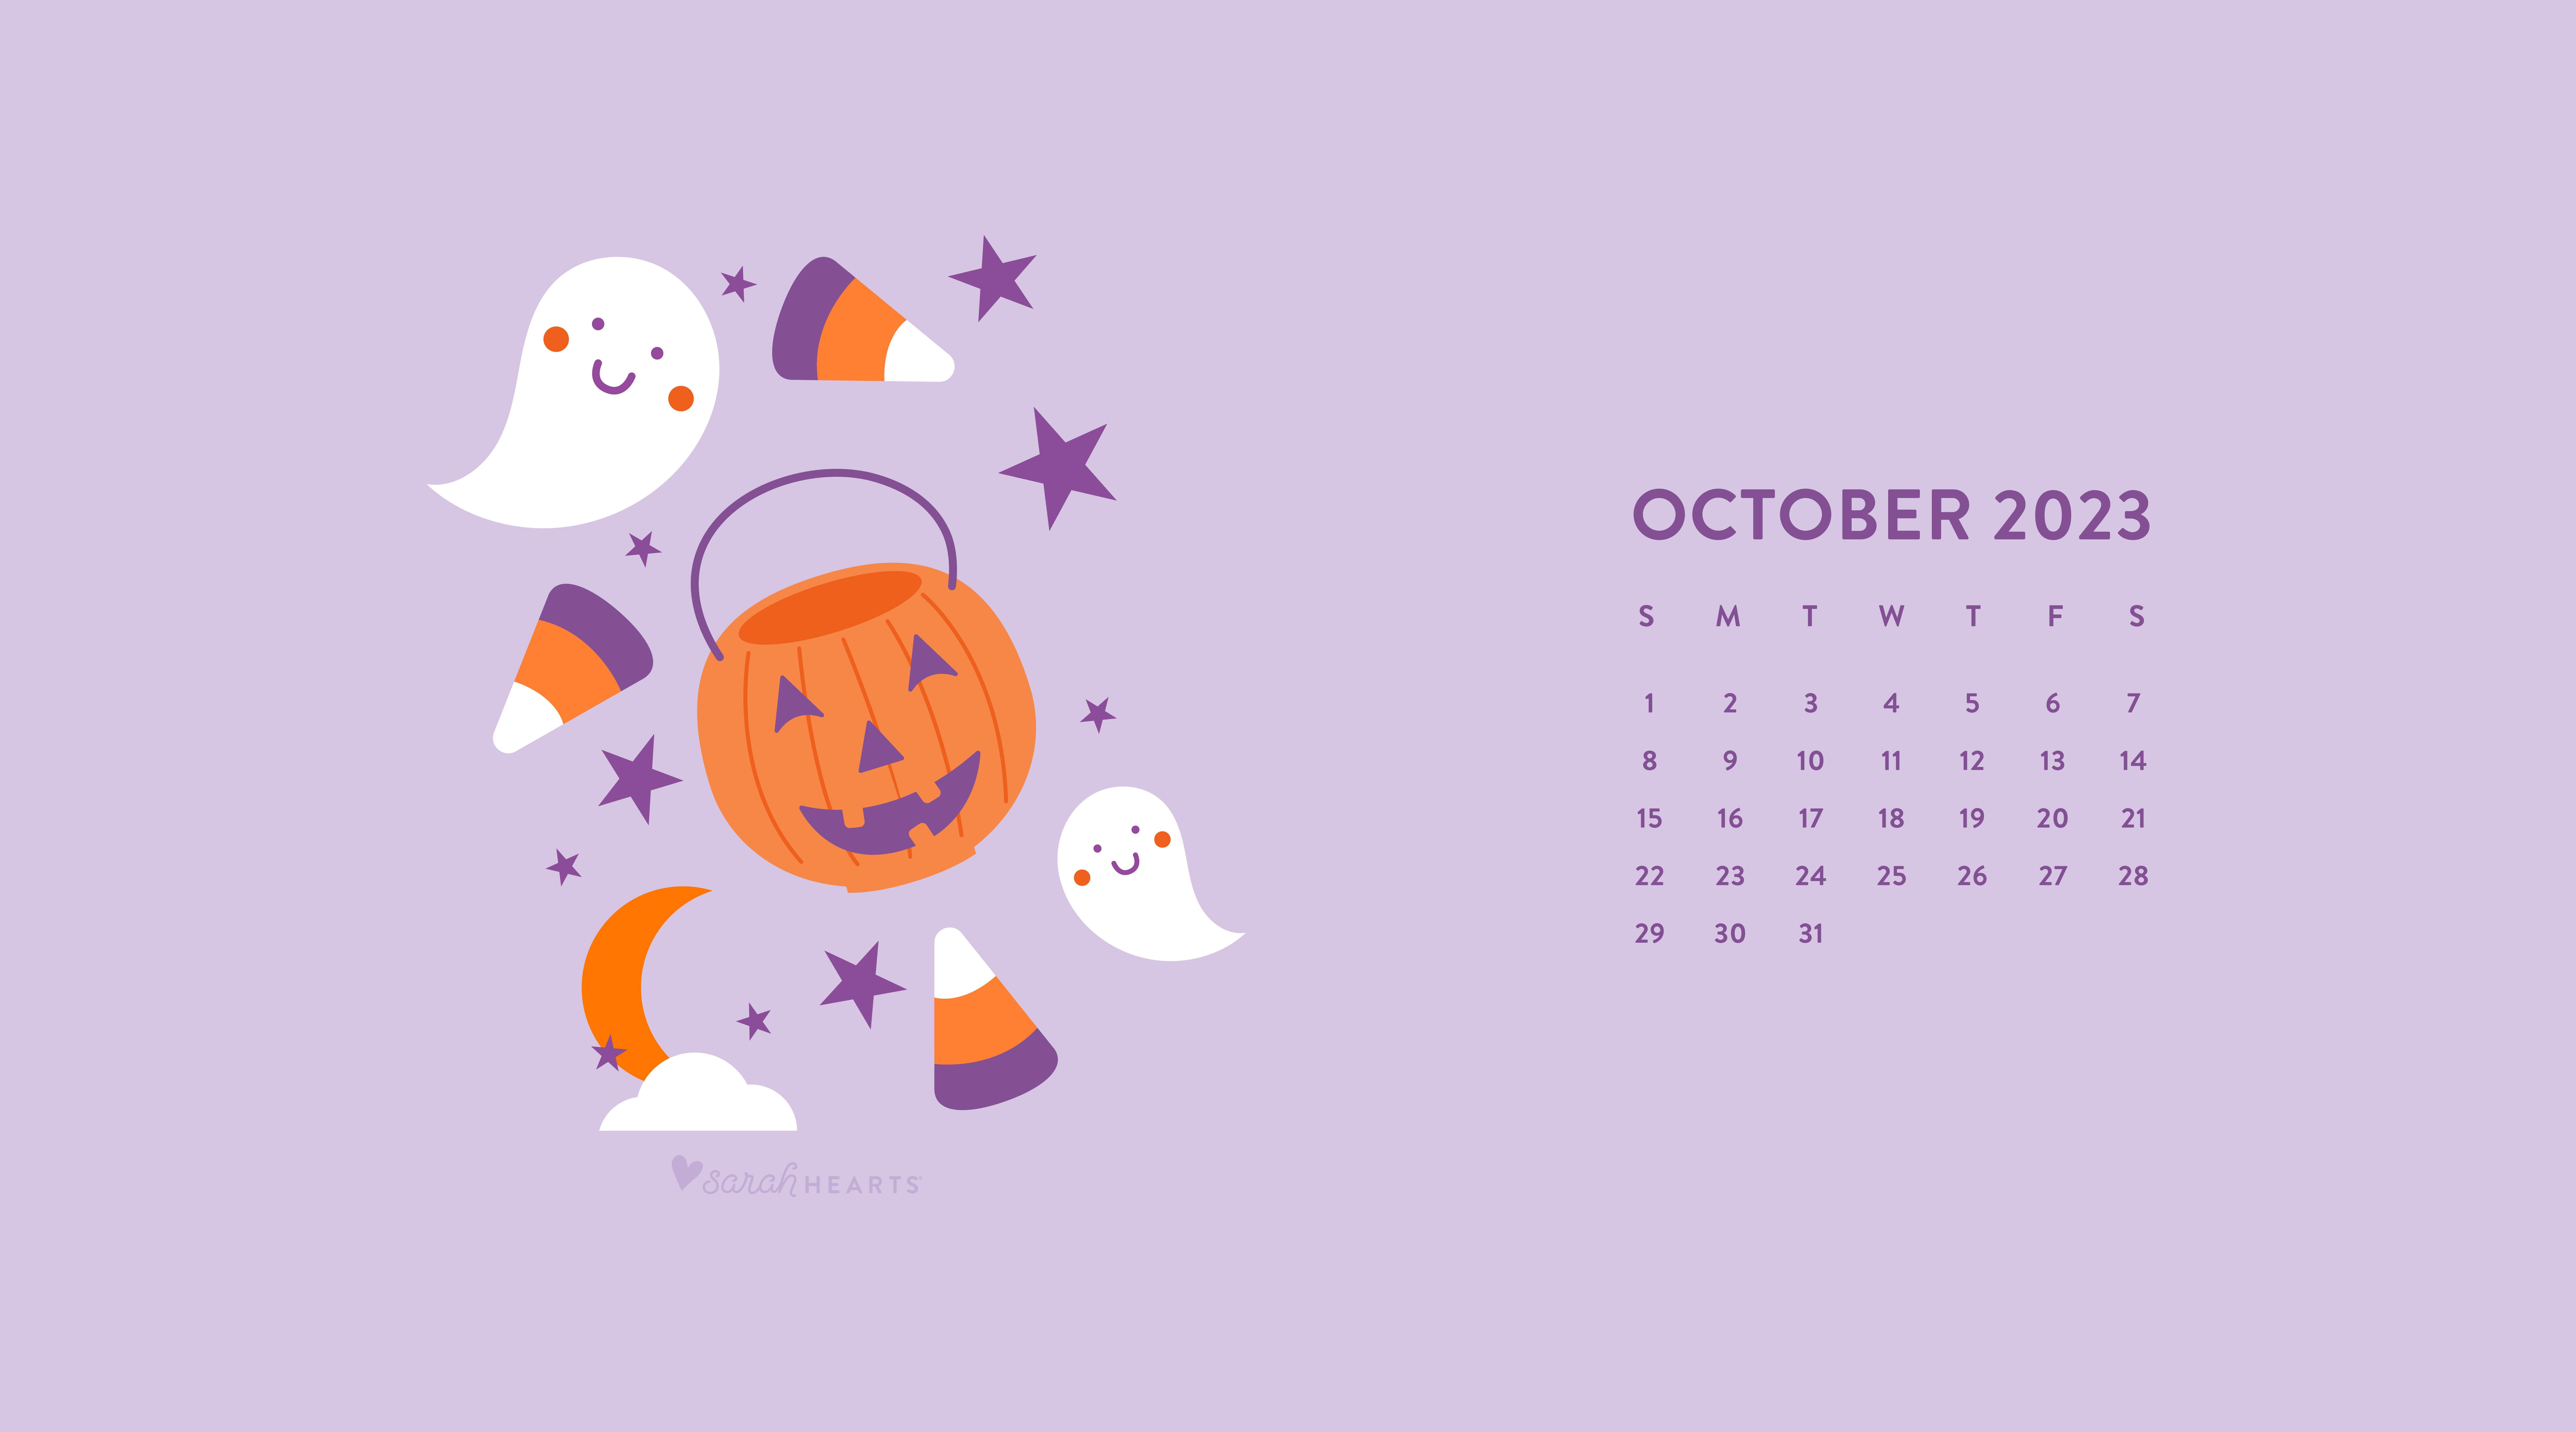 October 2023 Halloween Calendar Wallpaper